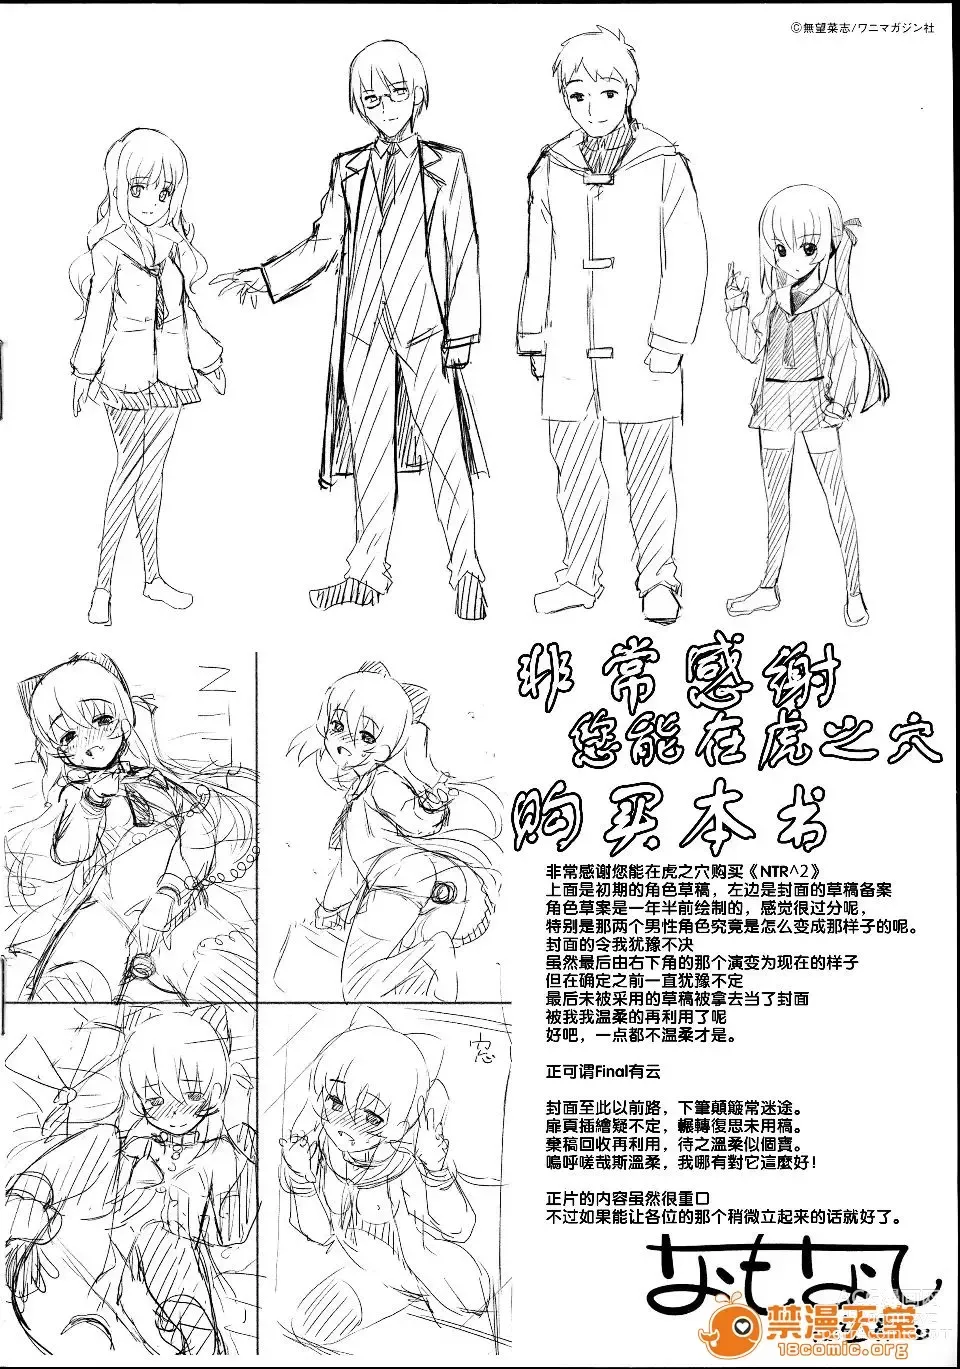 Page 236 of manga NTR²